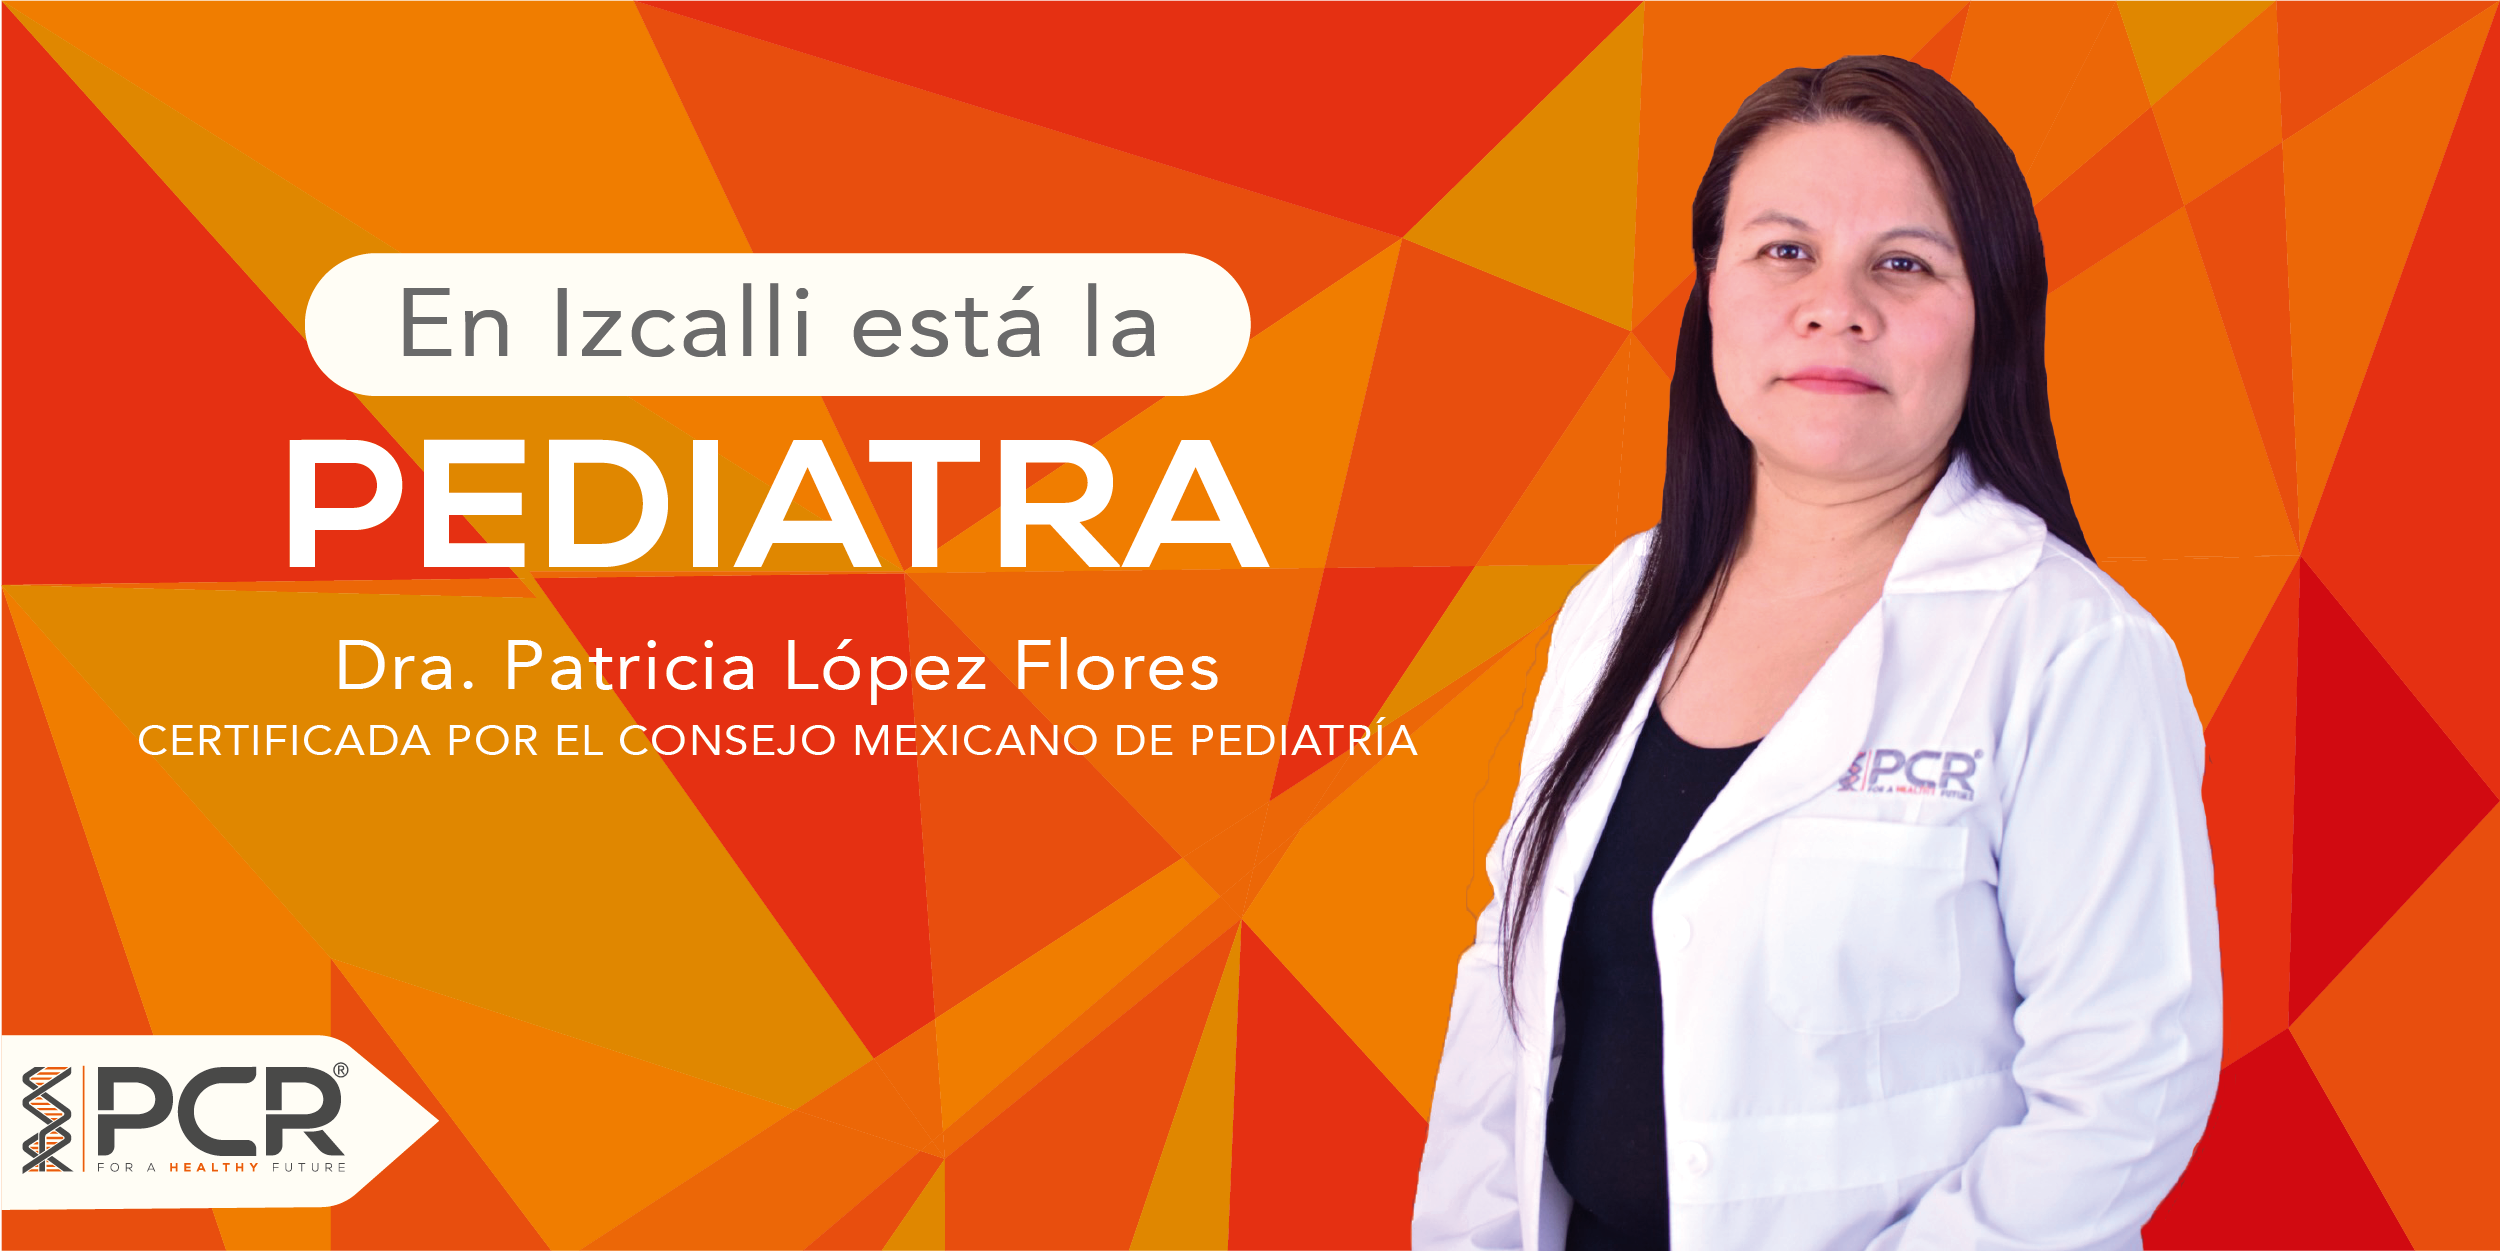 Dra. Patricia López Flores, PEDIATRA.